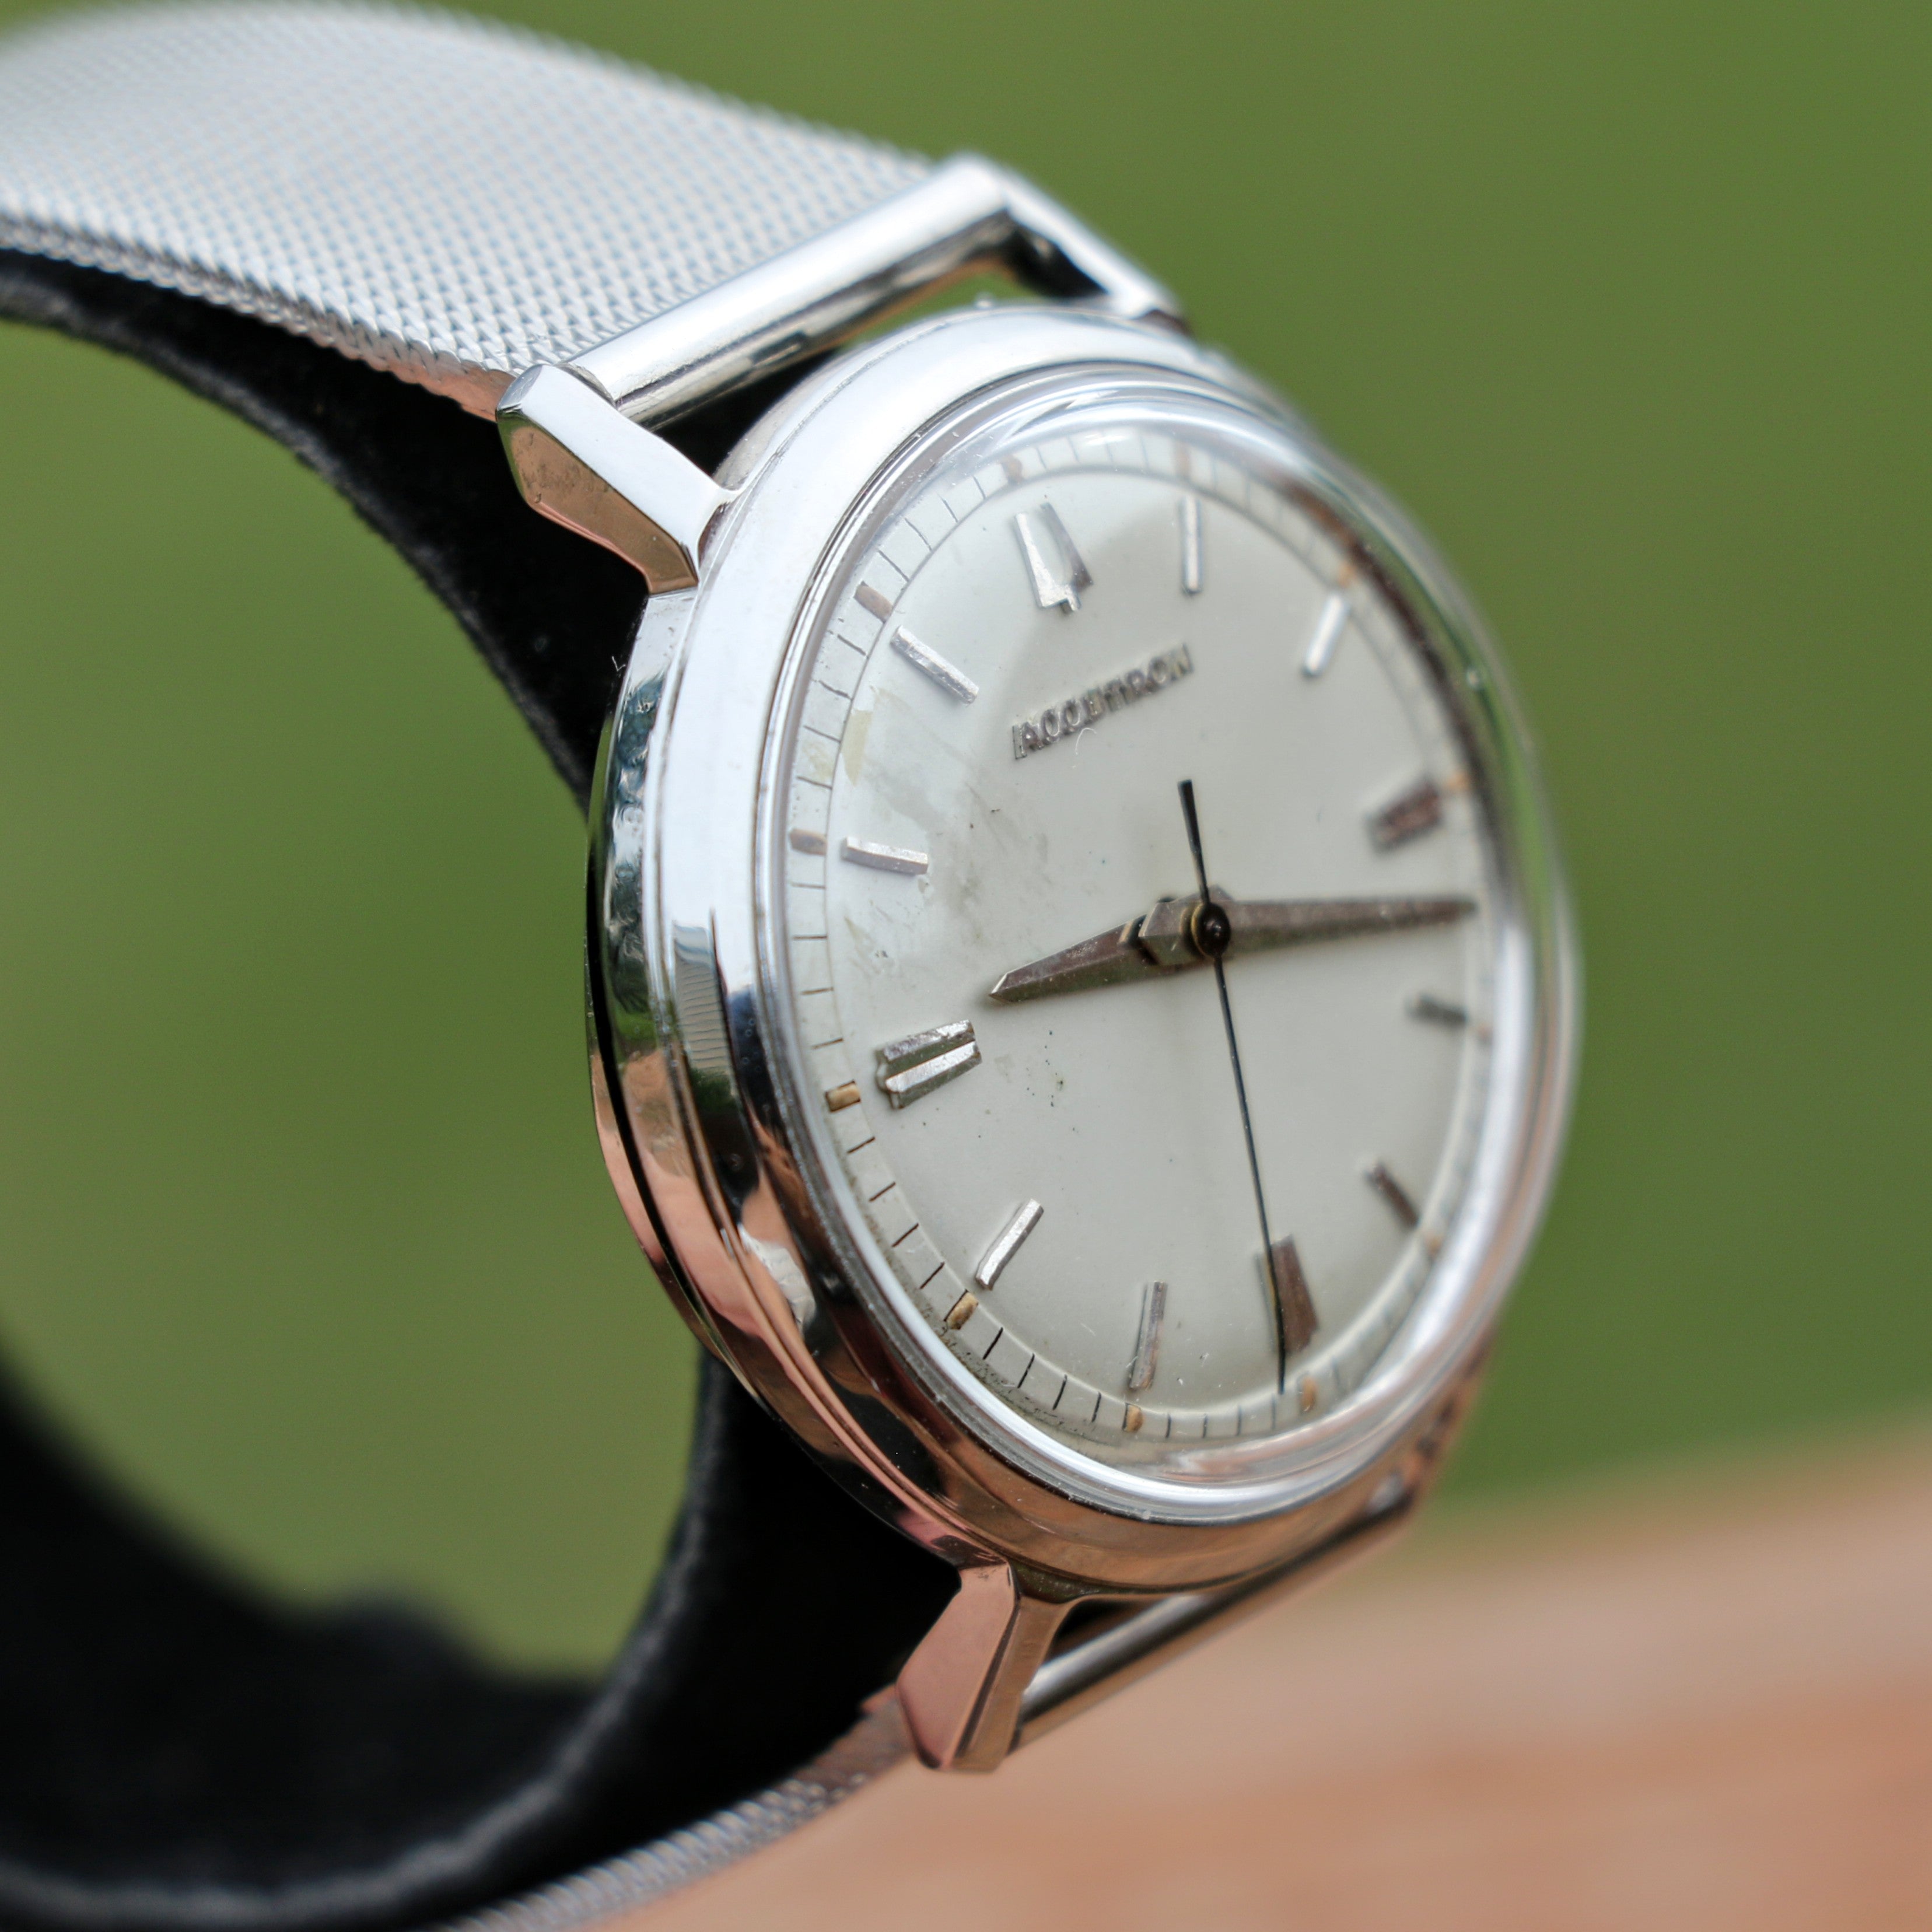 1967 BULOVA Accutron 214 Wristwatch All Stainless-Steel Vintage Watch